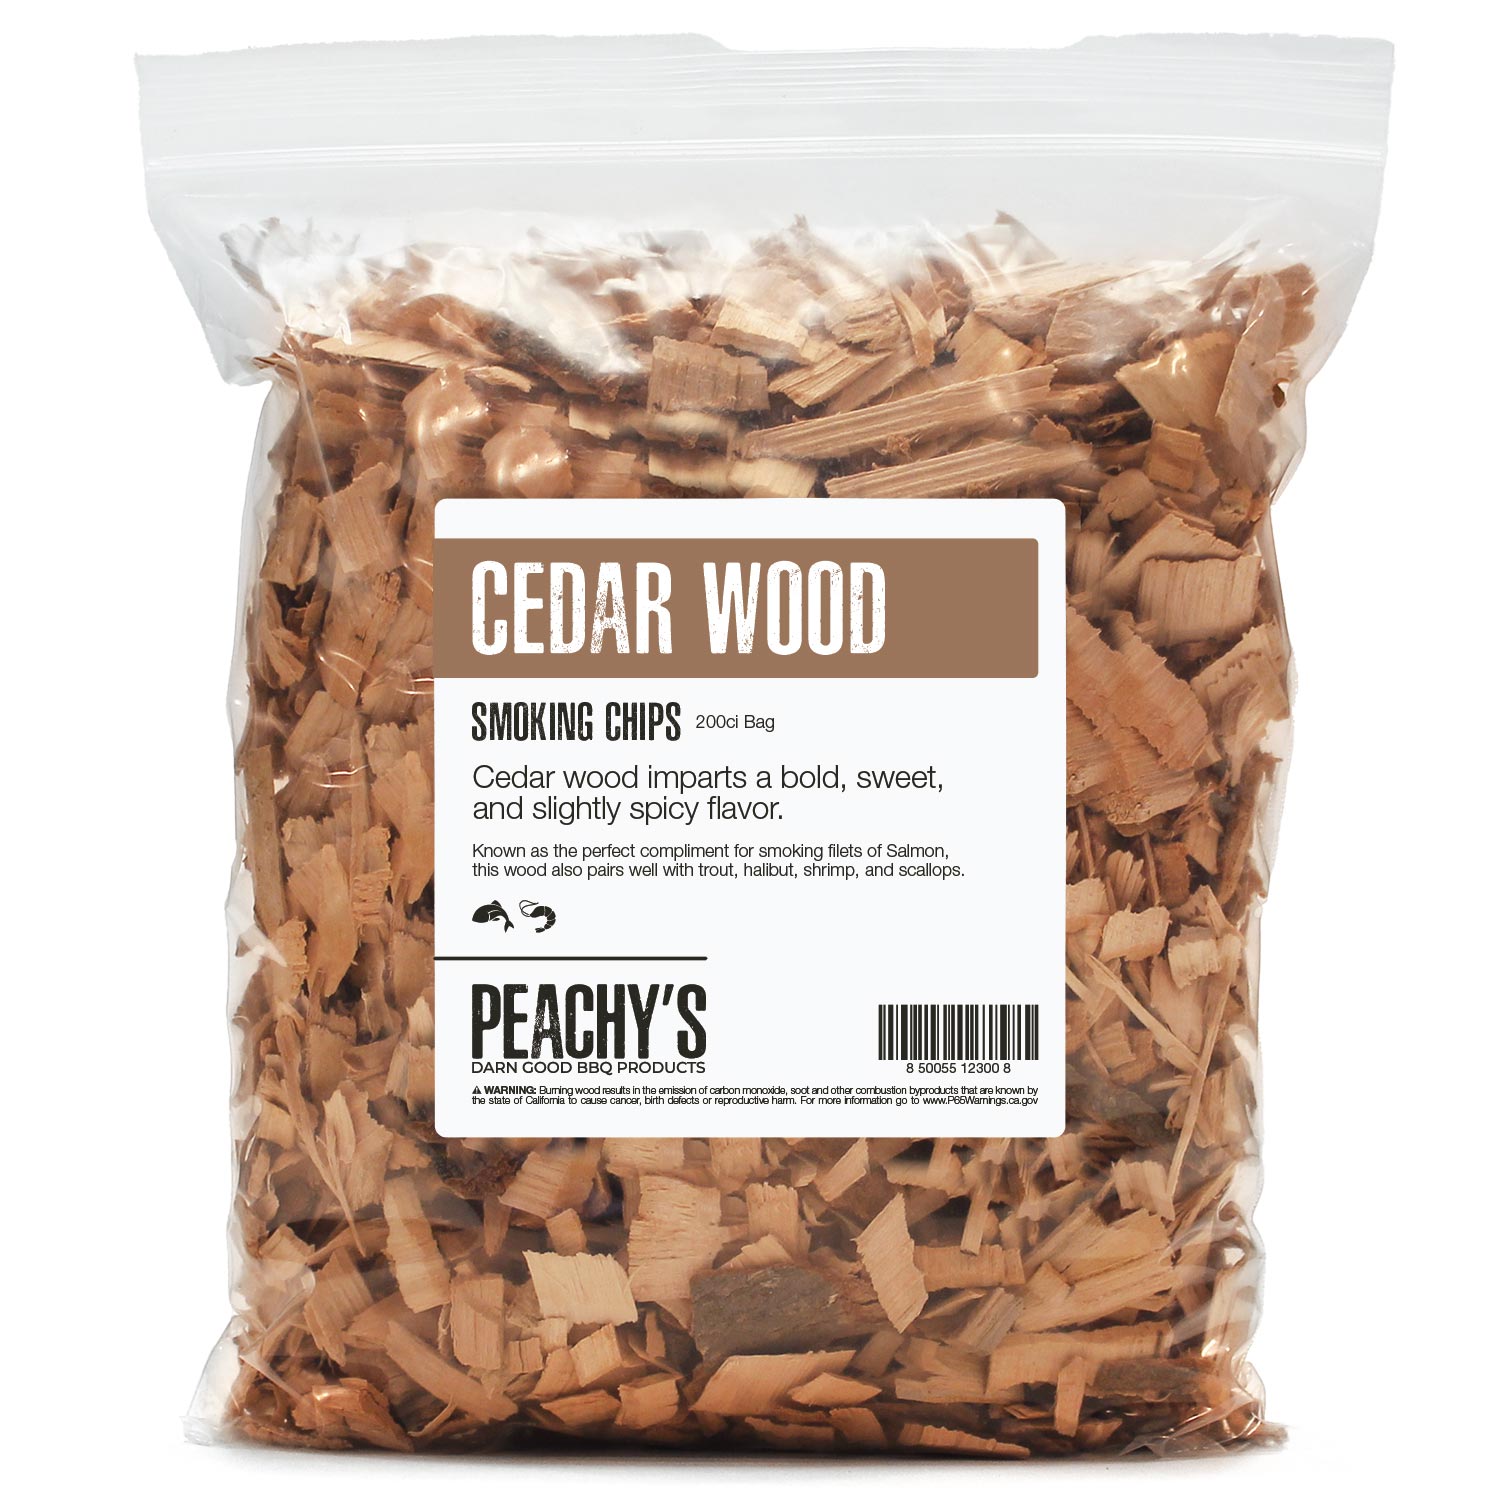 CEDAR Chips | 200ci Bag of Premium Smoking Woods by PEACHY'S